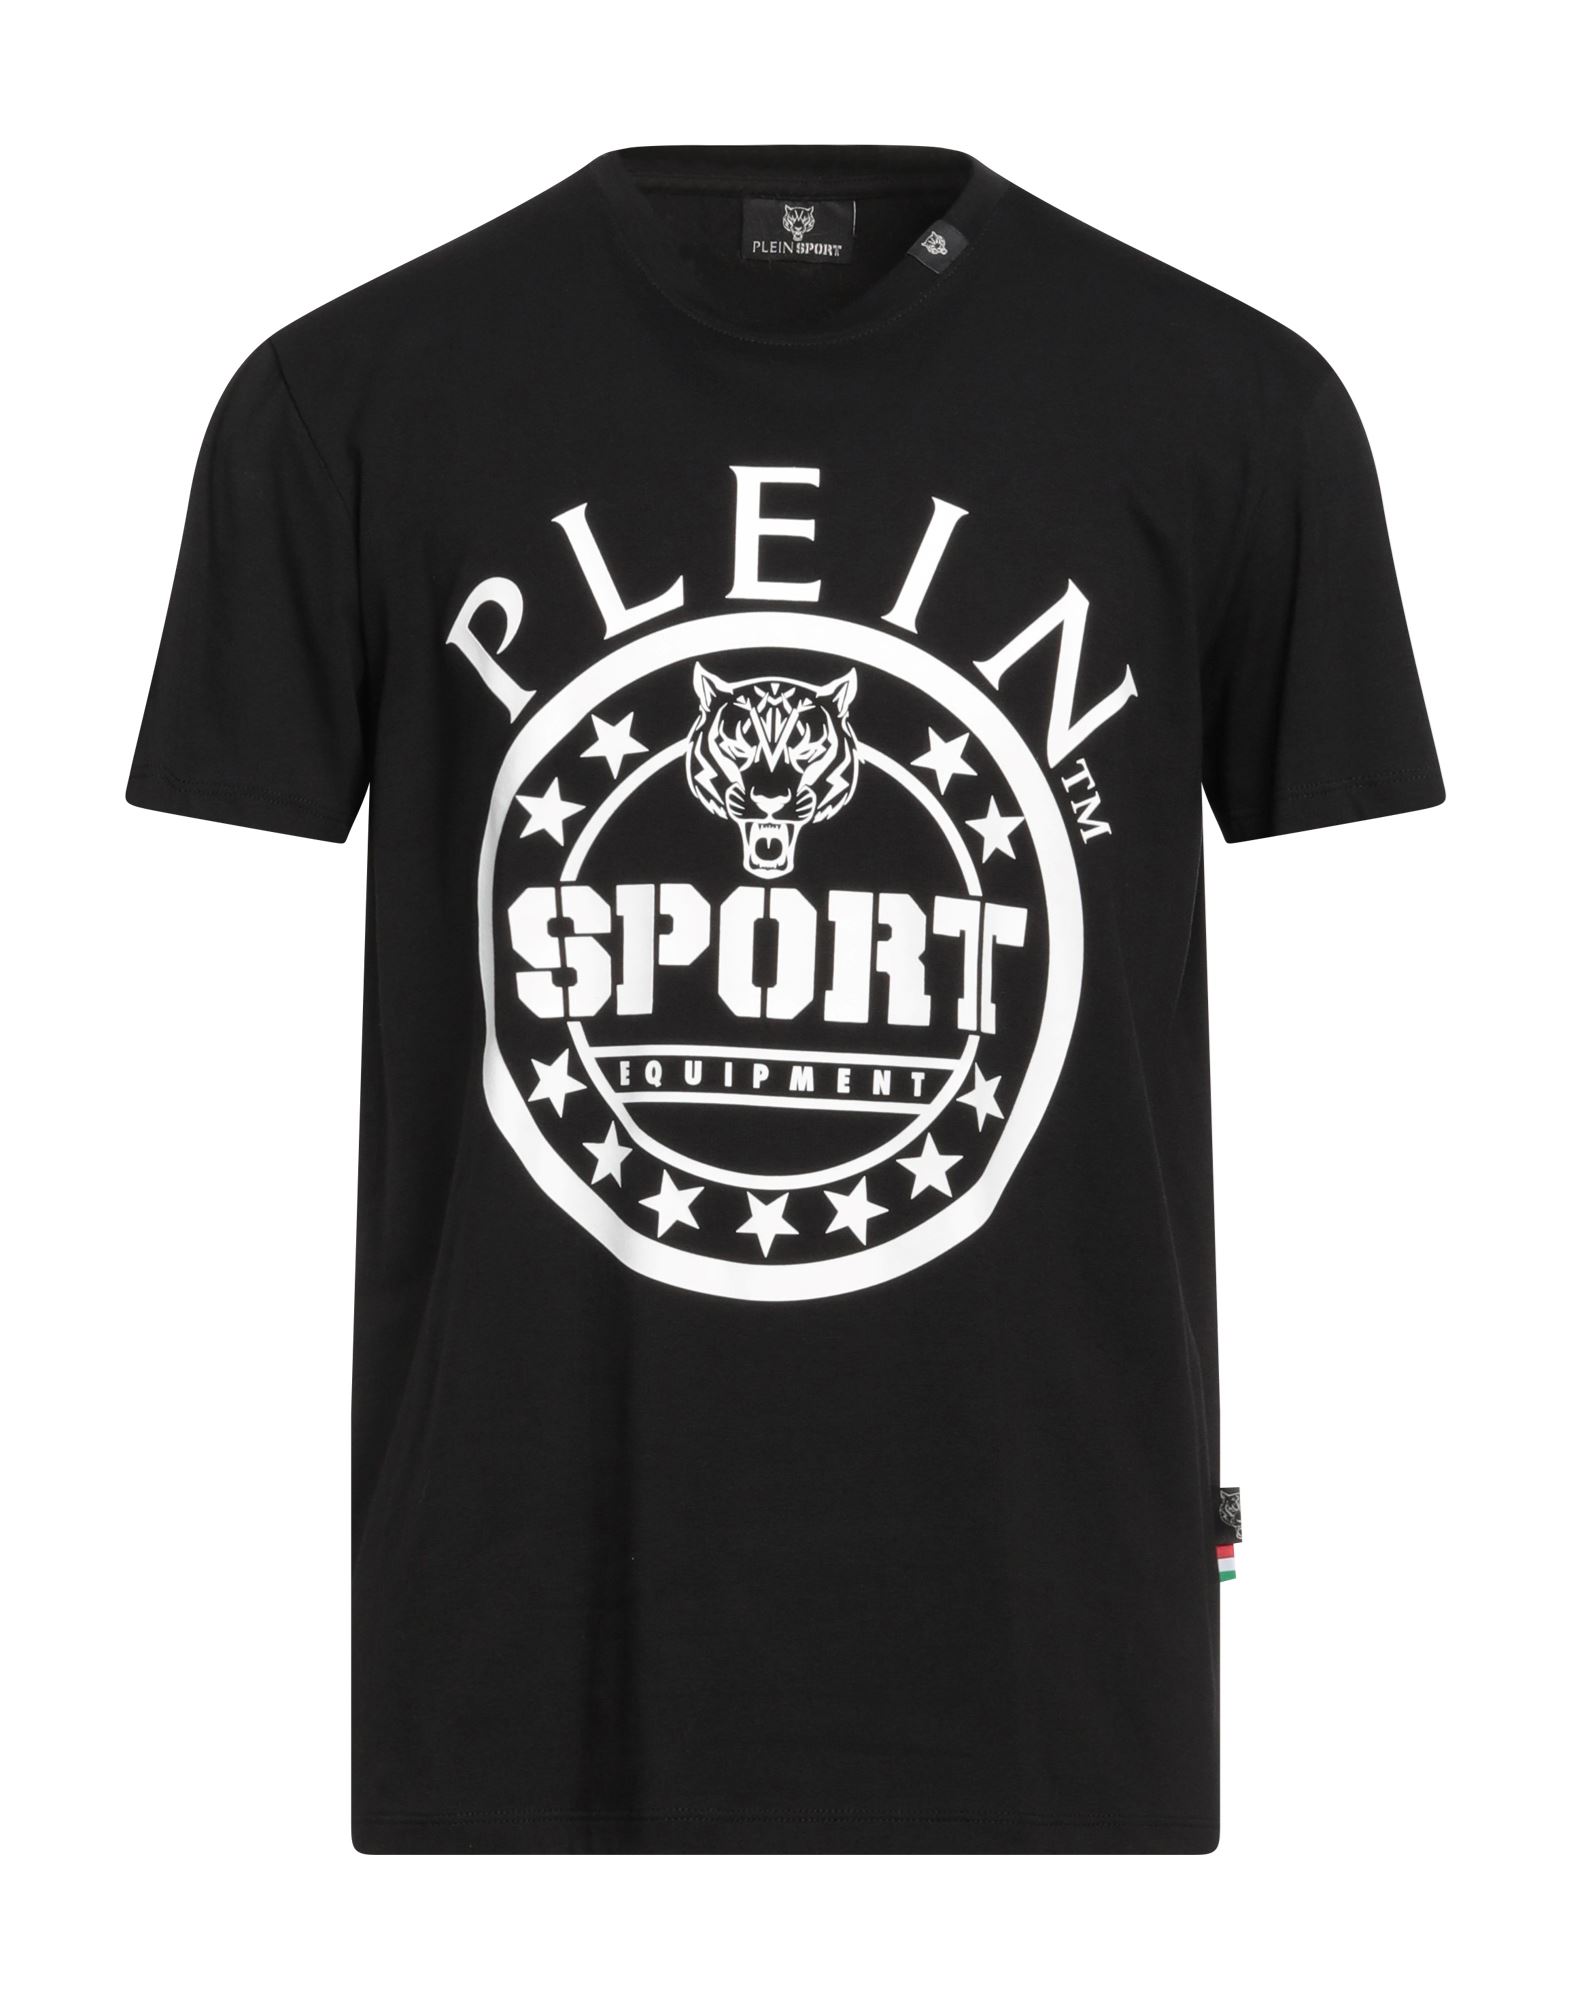 Plein Sport T-shirts In Black